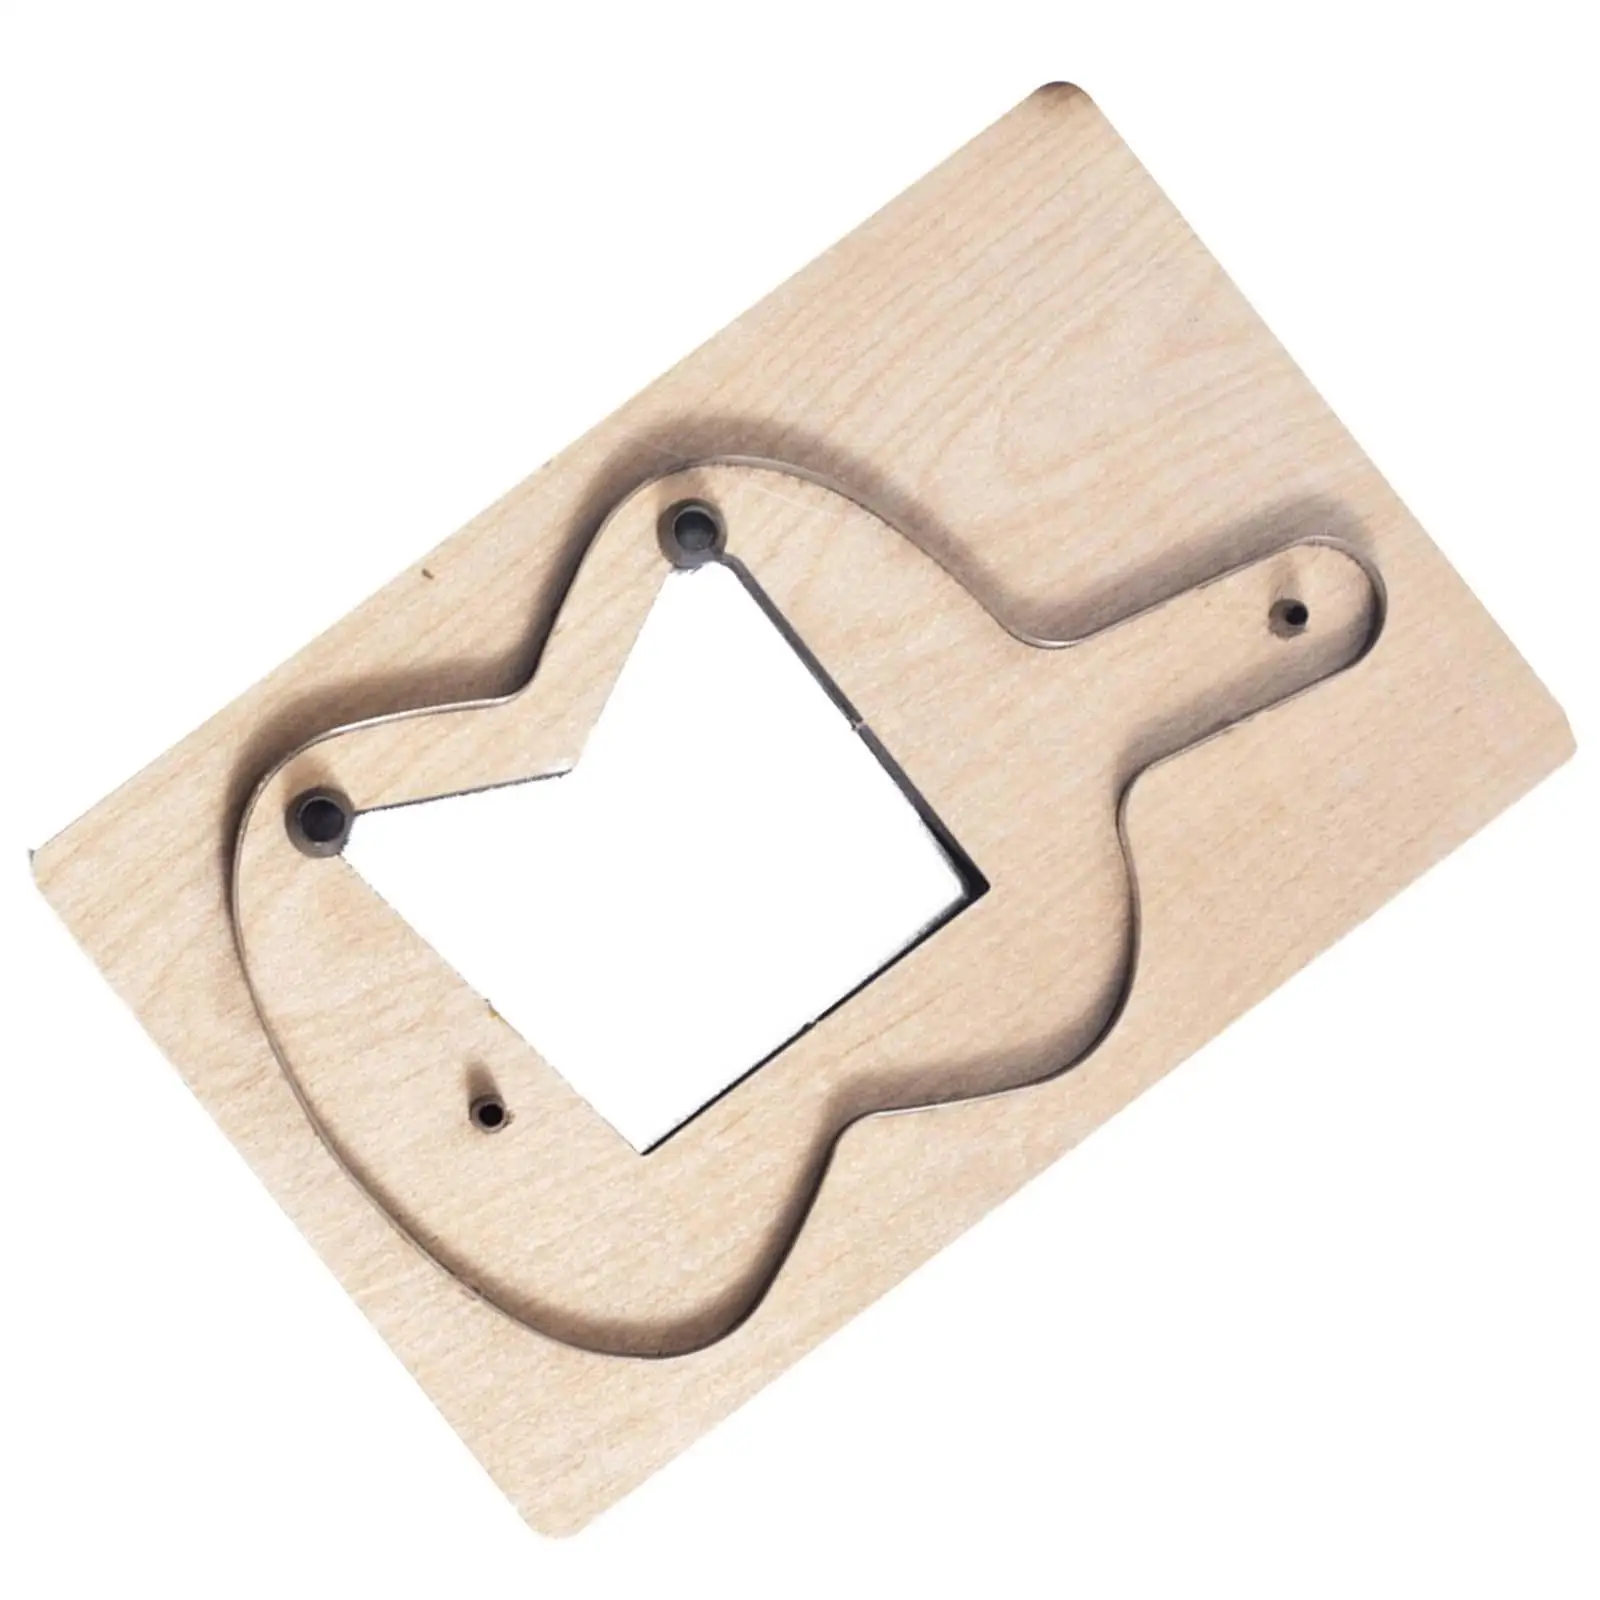 Key Sheath Wood DIY Practical Practice Leather Mini Keys Purse Making Die Cutting Stencil Leather Keys Case Template Accessories